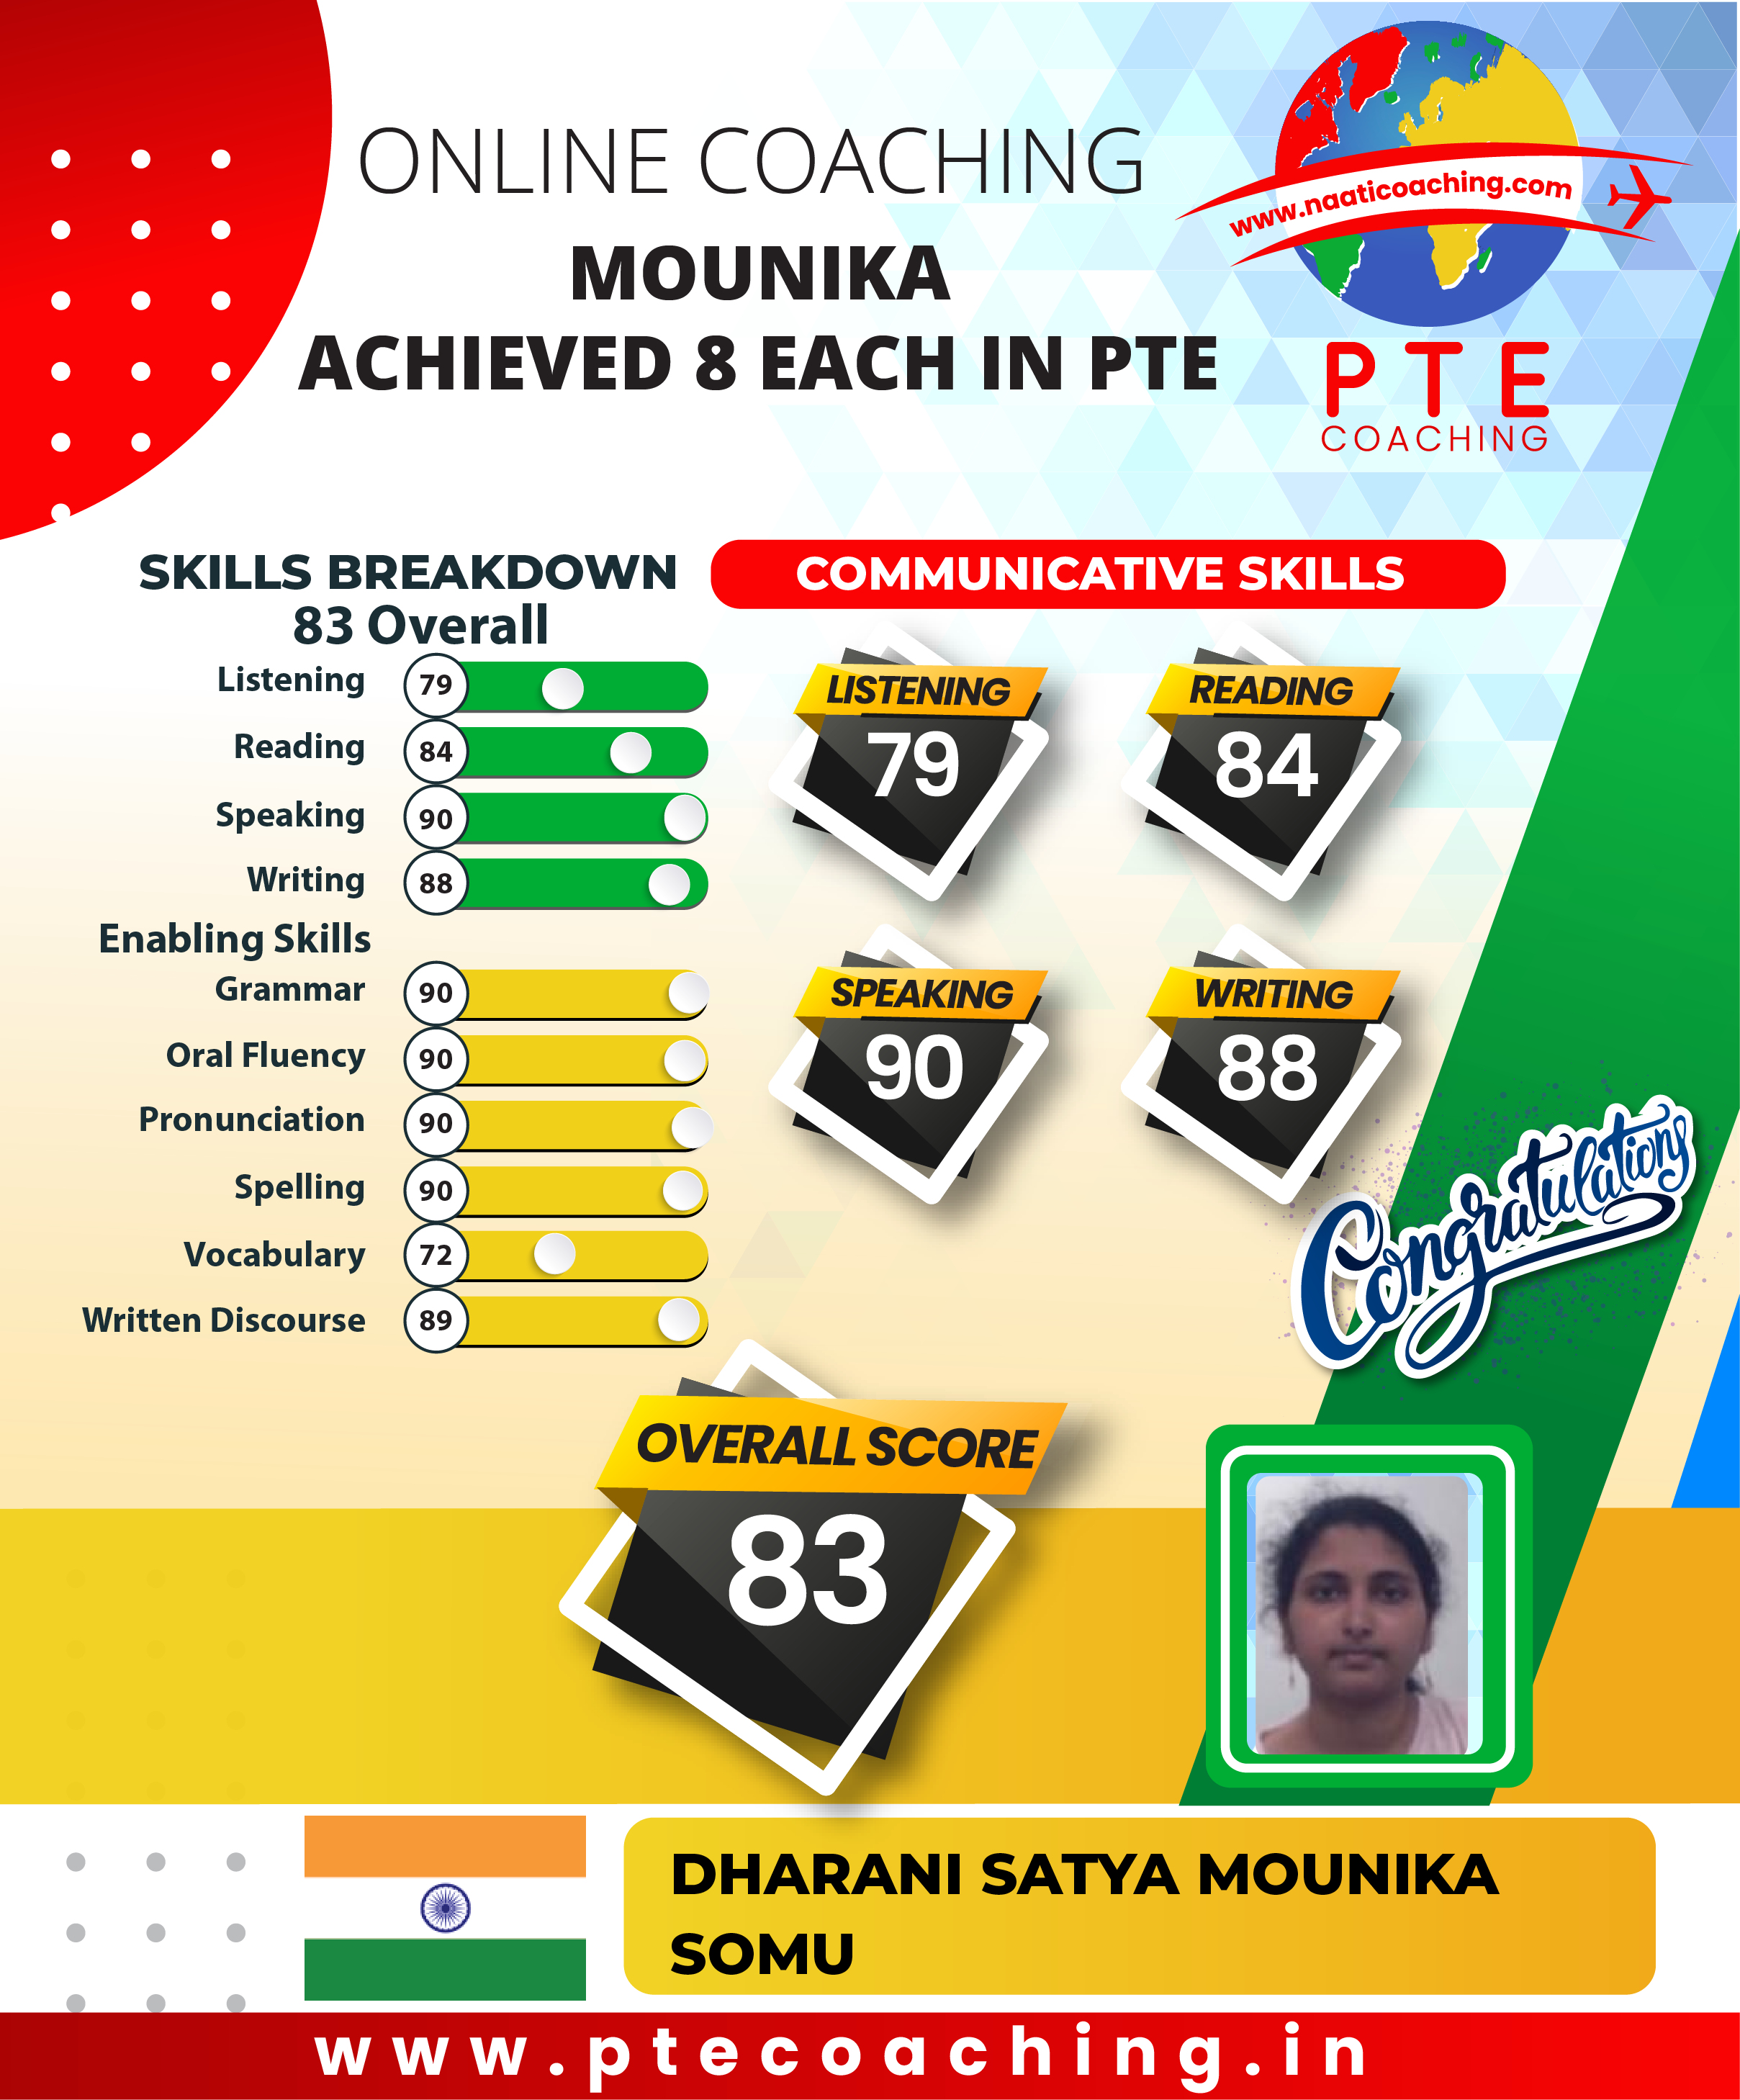 PTE Coaching Scorecard - Mounika achieved 8 each in PTE